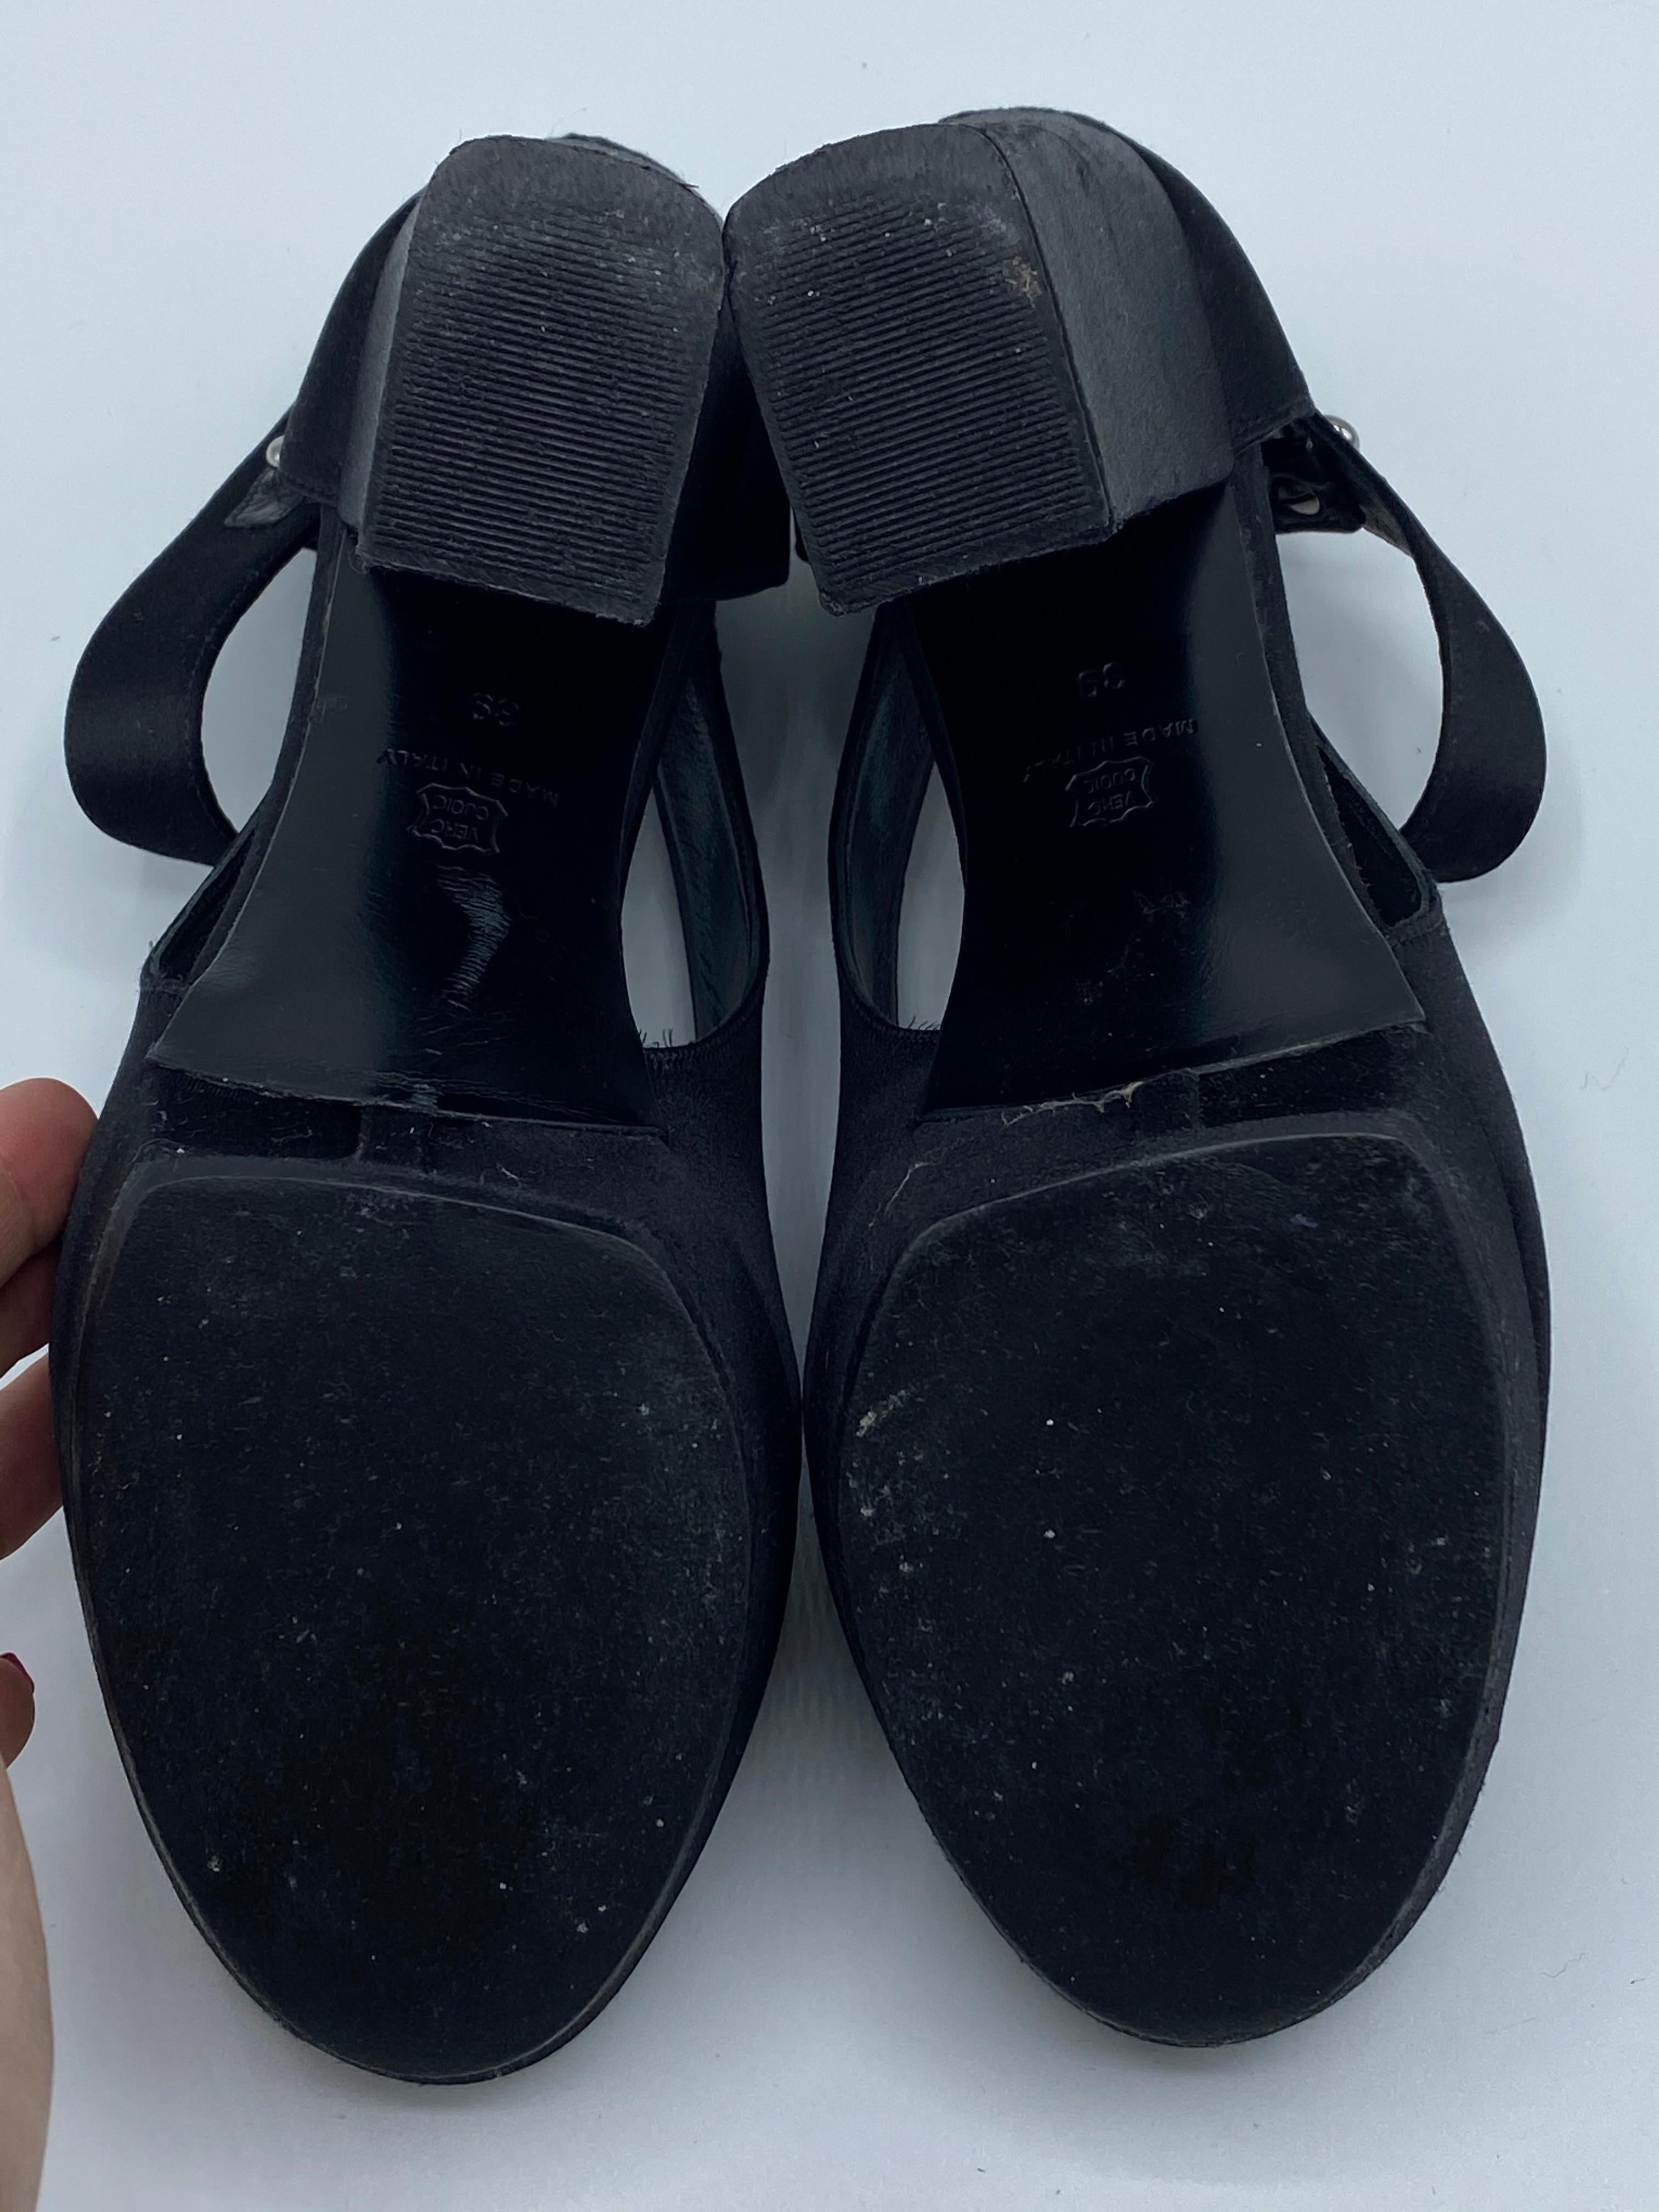 2007 Lanvin Black Suede High Heels Sandals, Size 39 For Sale 1